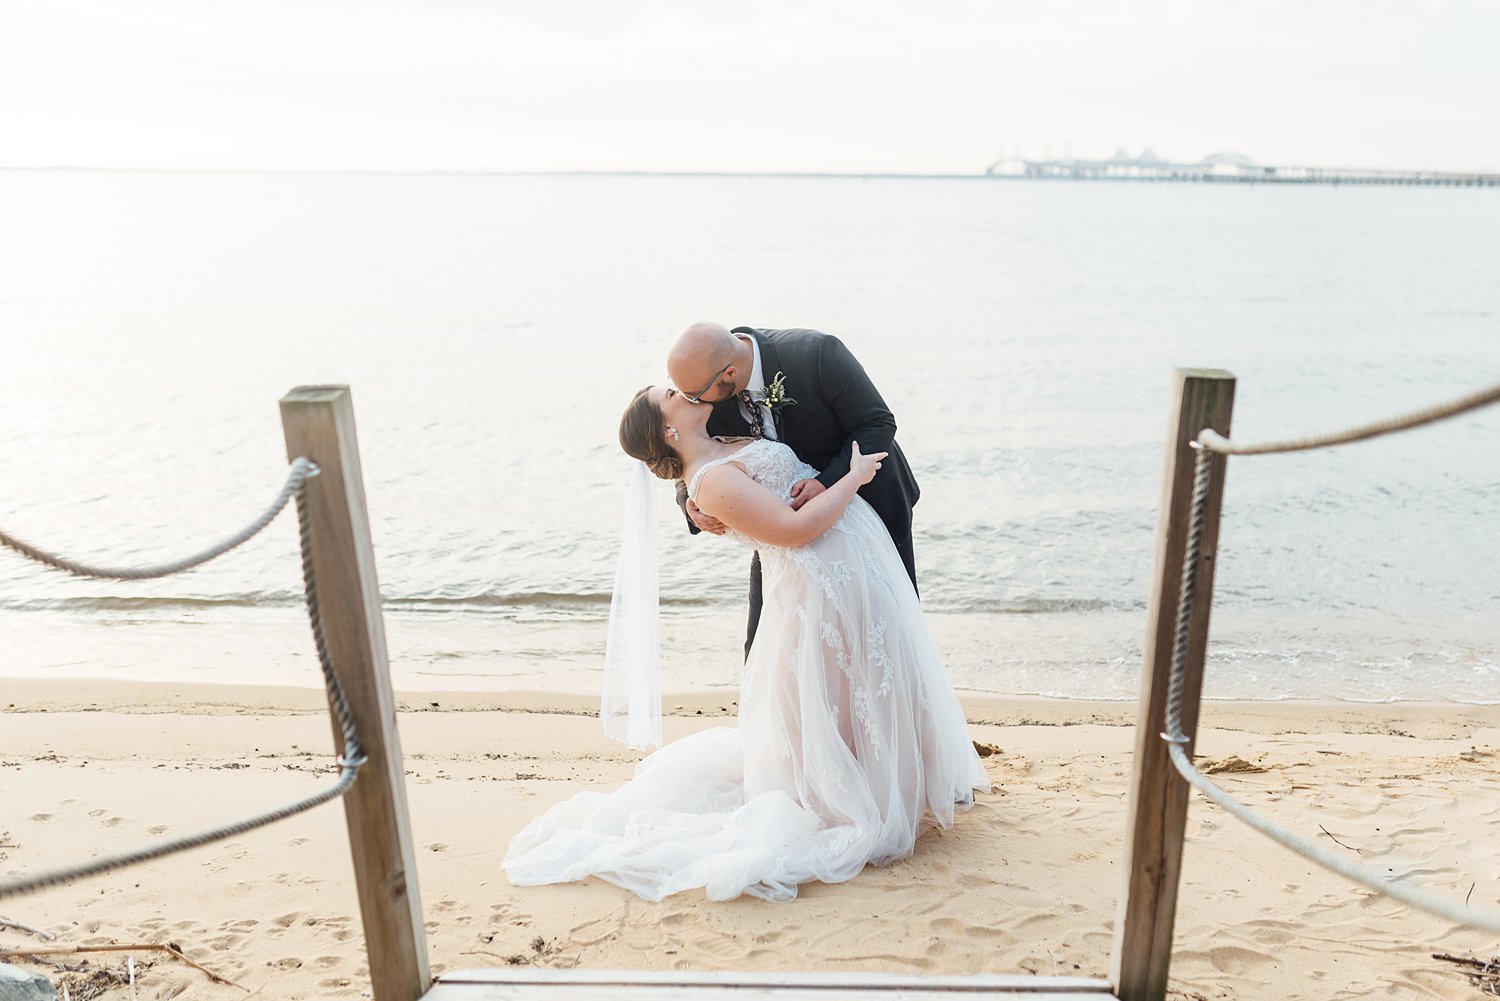 Emily + Andrew - Chesapeake Bay Beach Club Wedding - Annapolis Maryland Wedding Photographer - Alison Dunn Photography photo